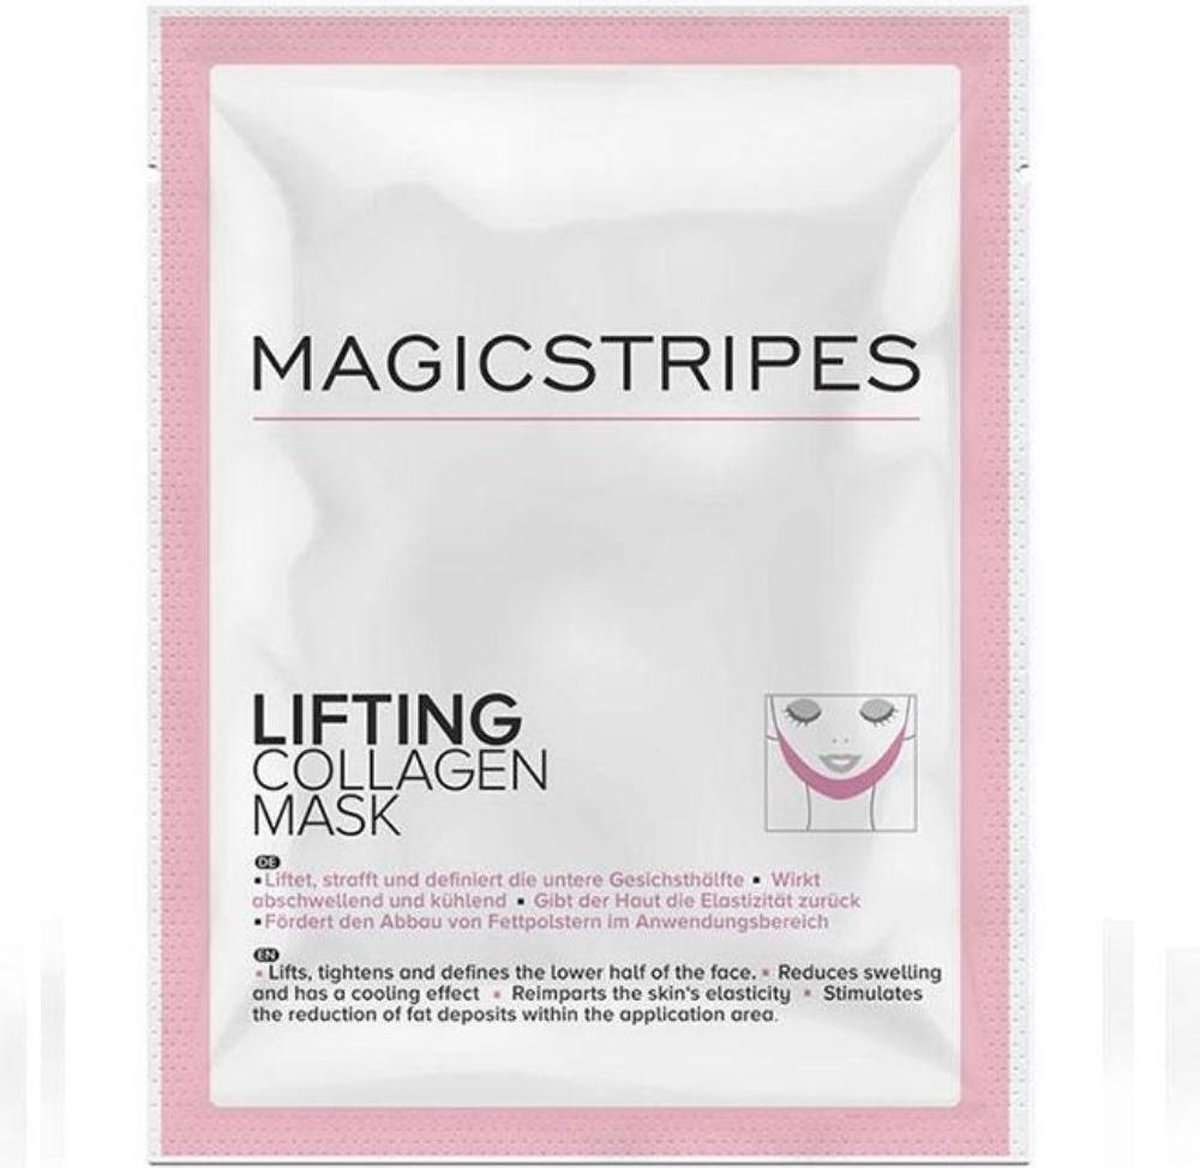 Magicstripes - Lifting Collagen Mask - 1 st